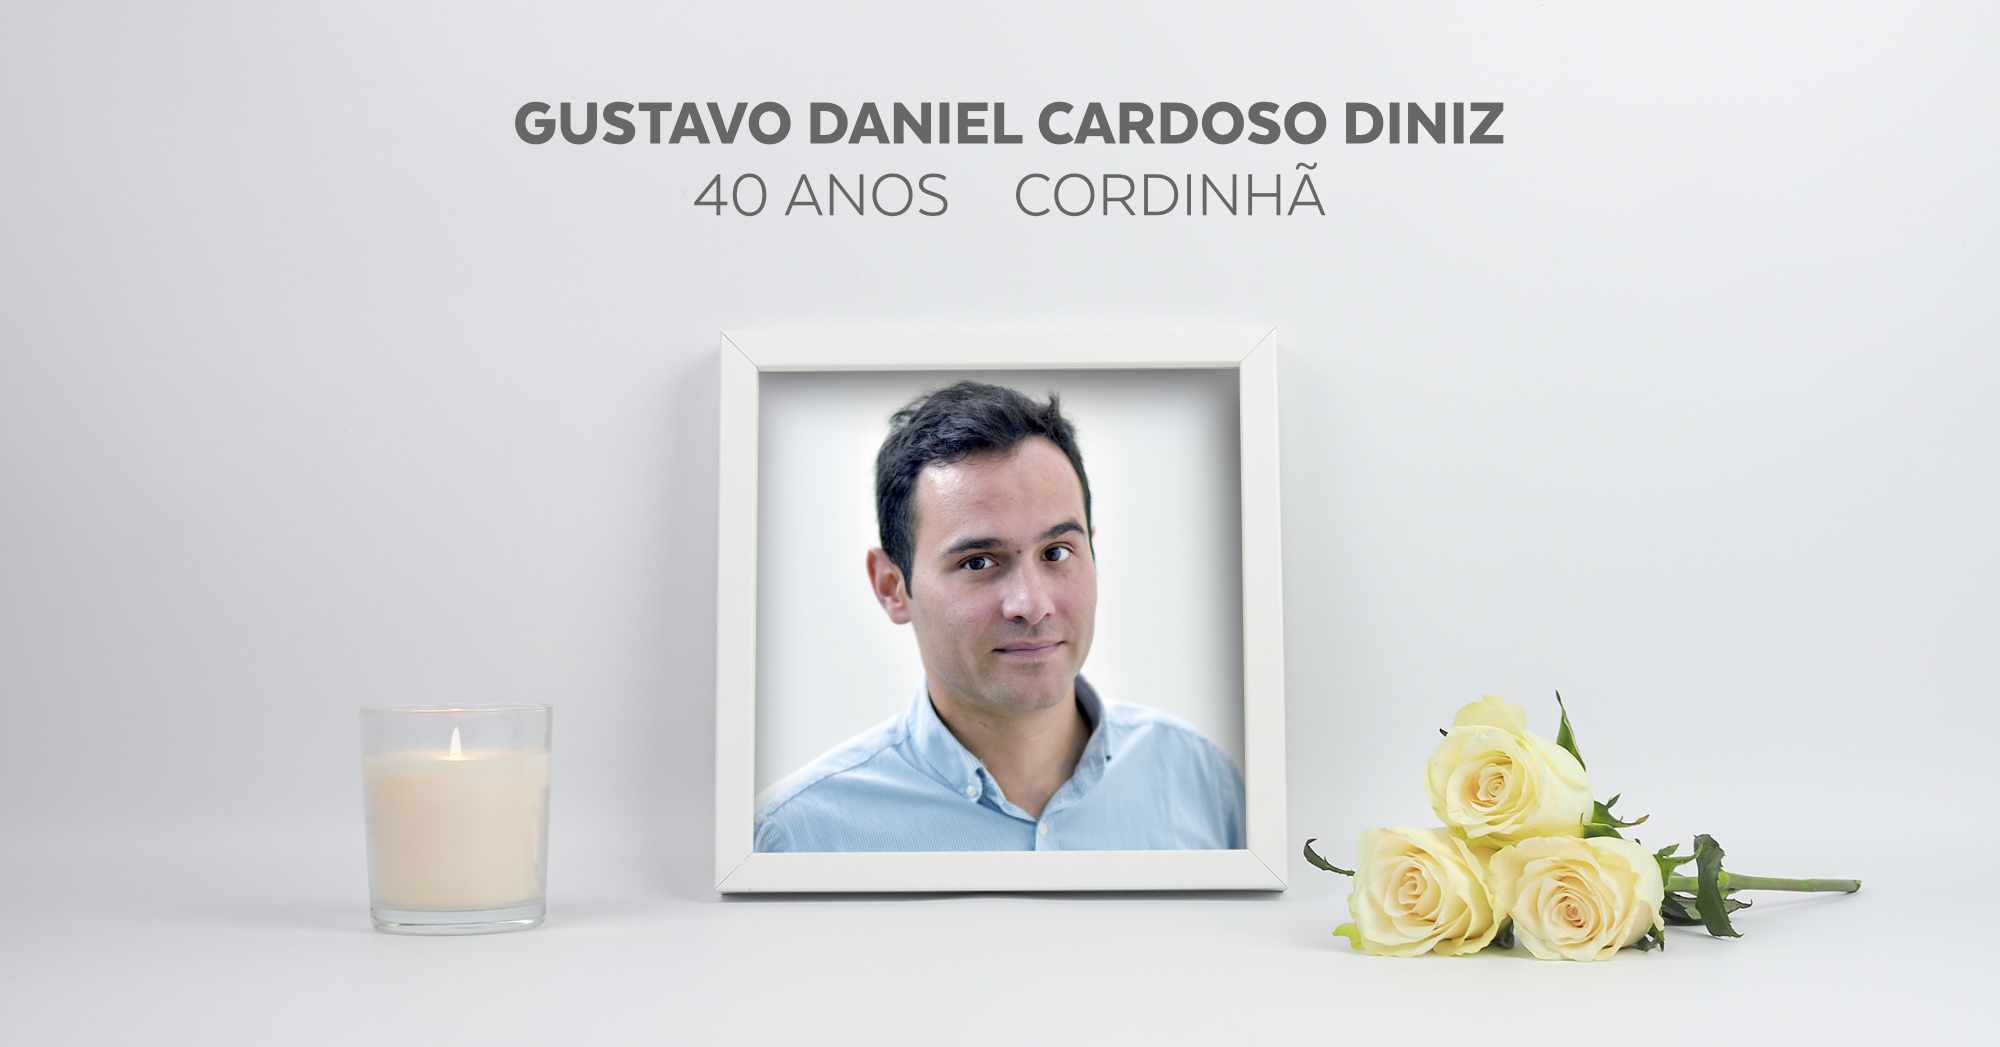 Gustavo Daniel Cardoso Diniz